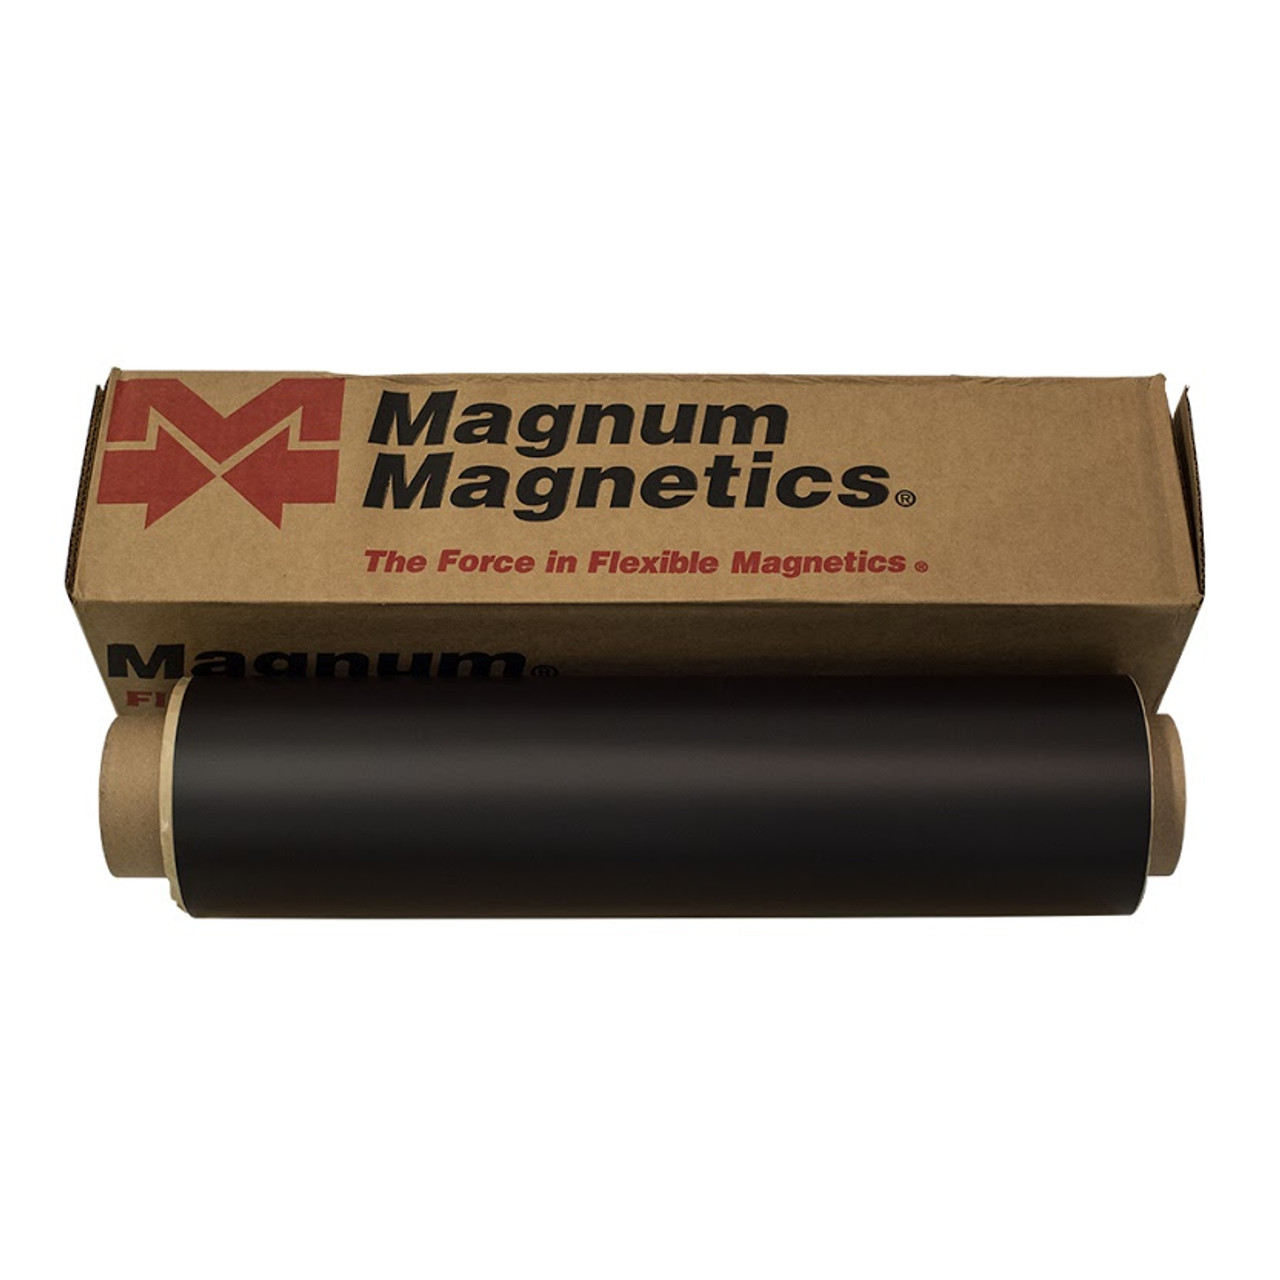 24 x 5' Roll Dry Erase Magnet - Magnum Magnetics